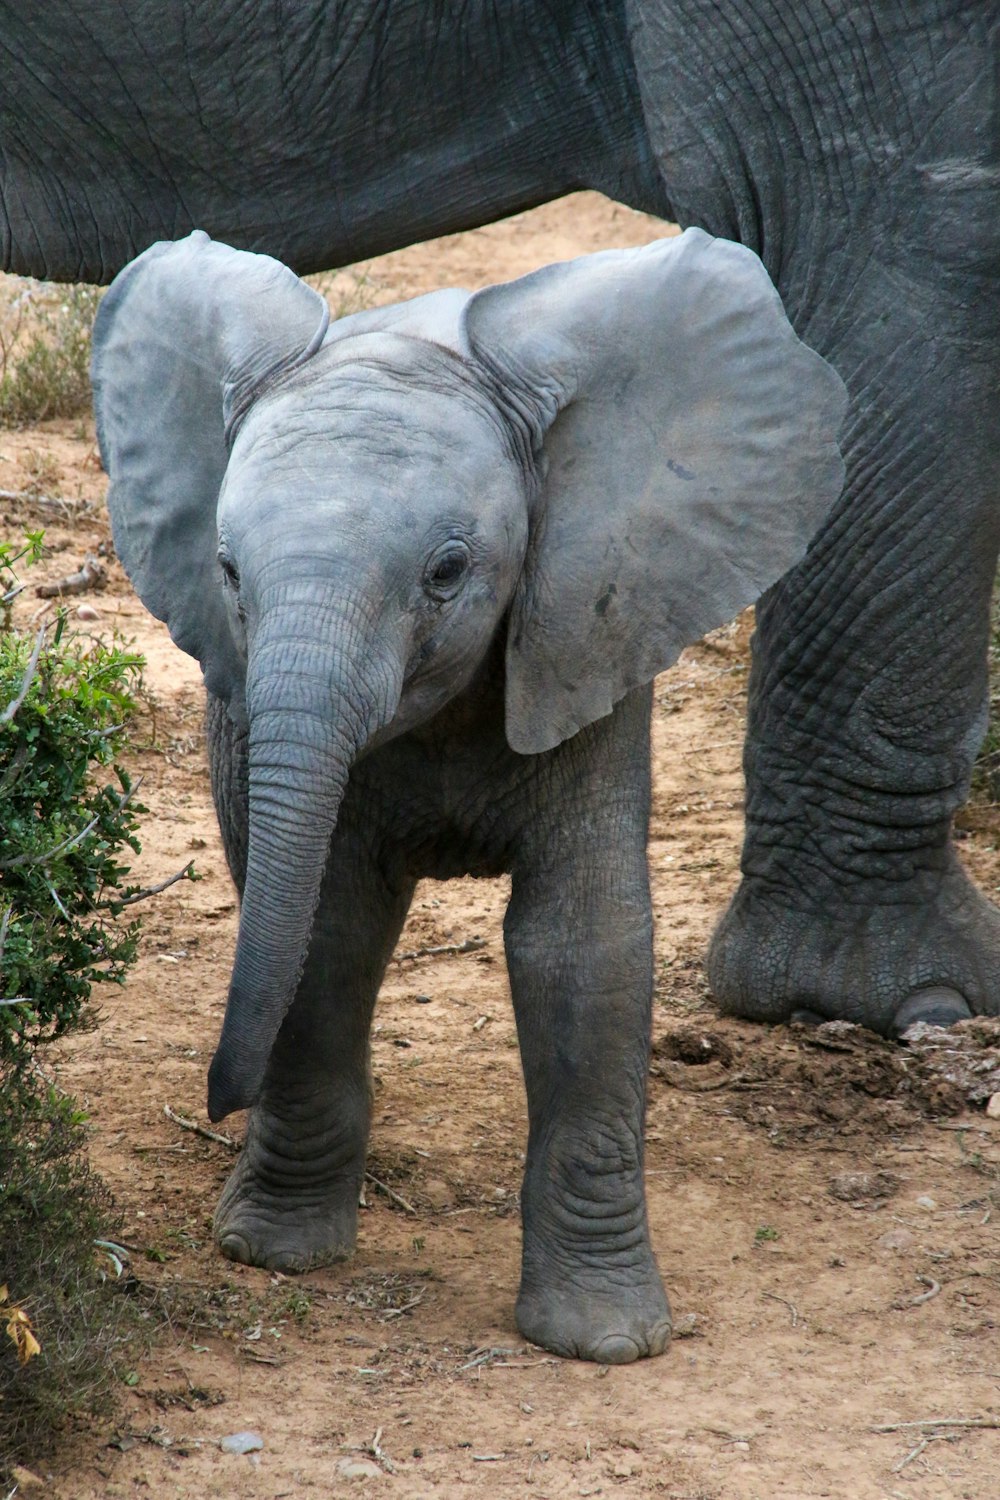 gray elephant walking on brown soil during daytime